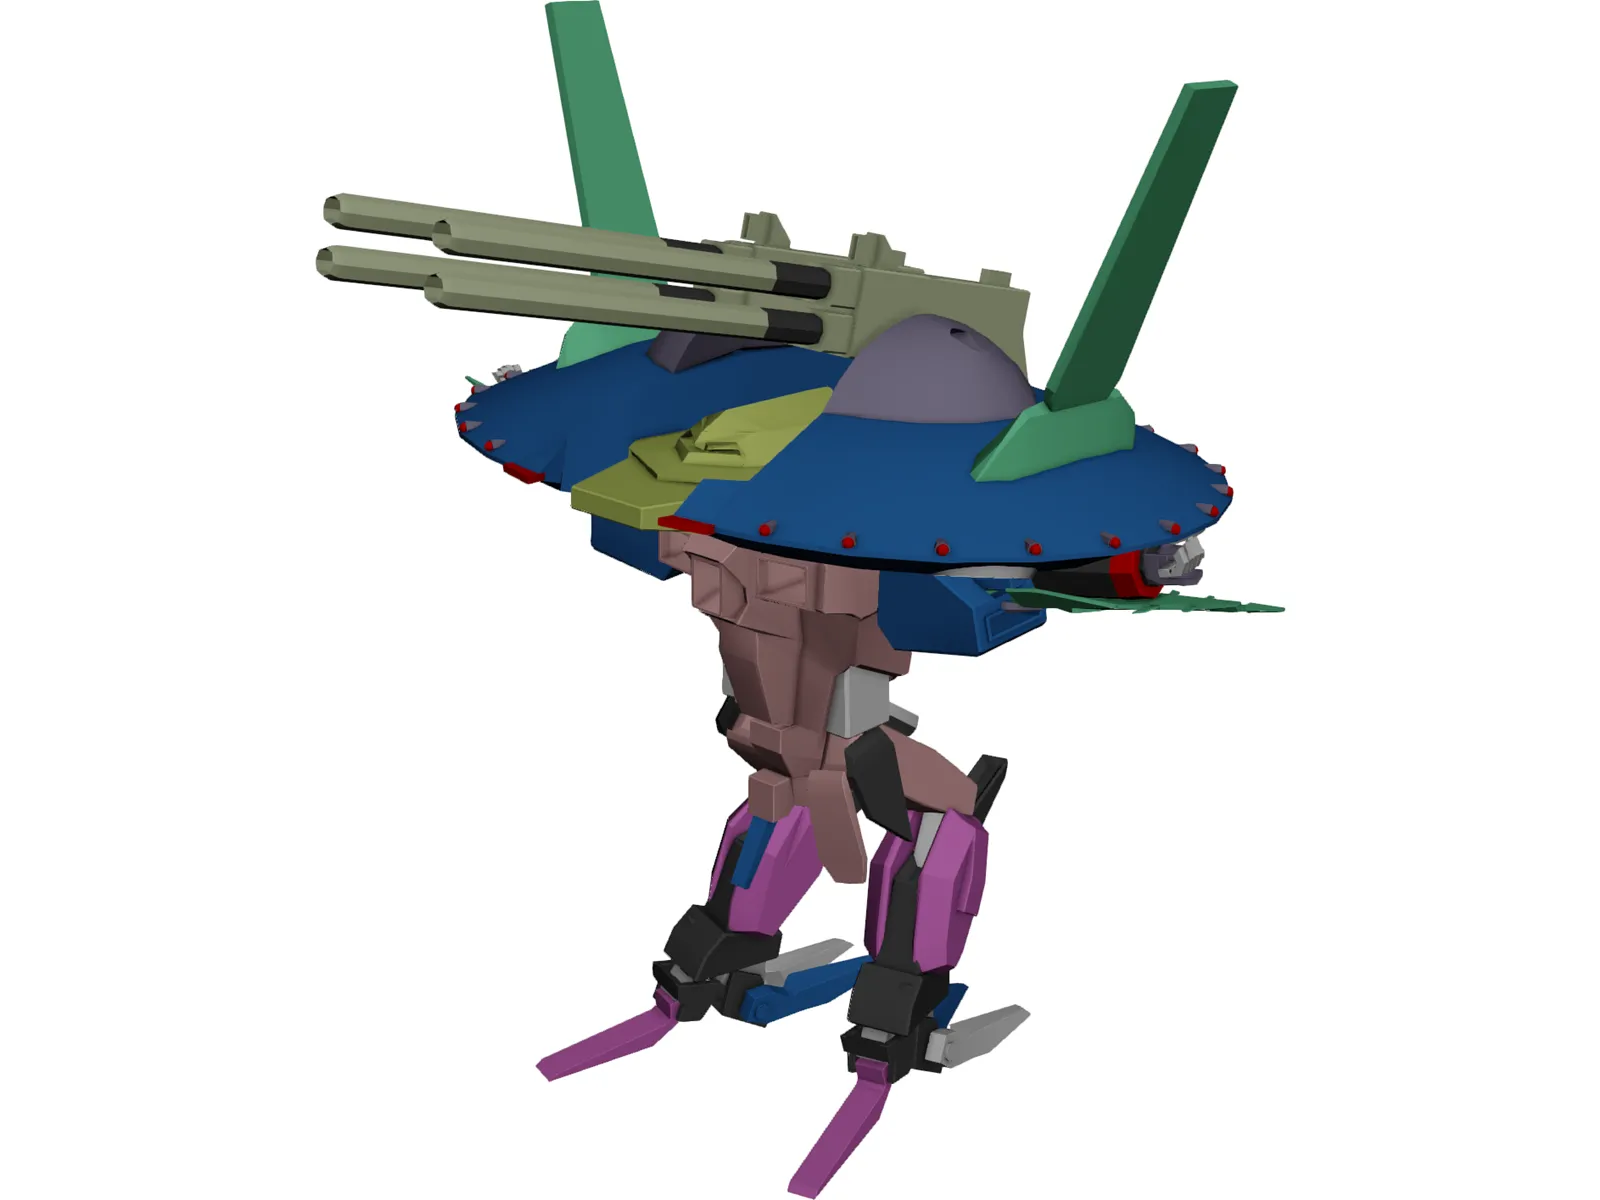 Armored Robot 3D Model